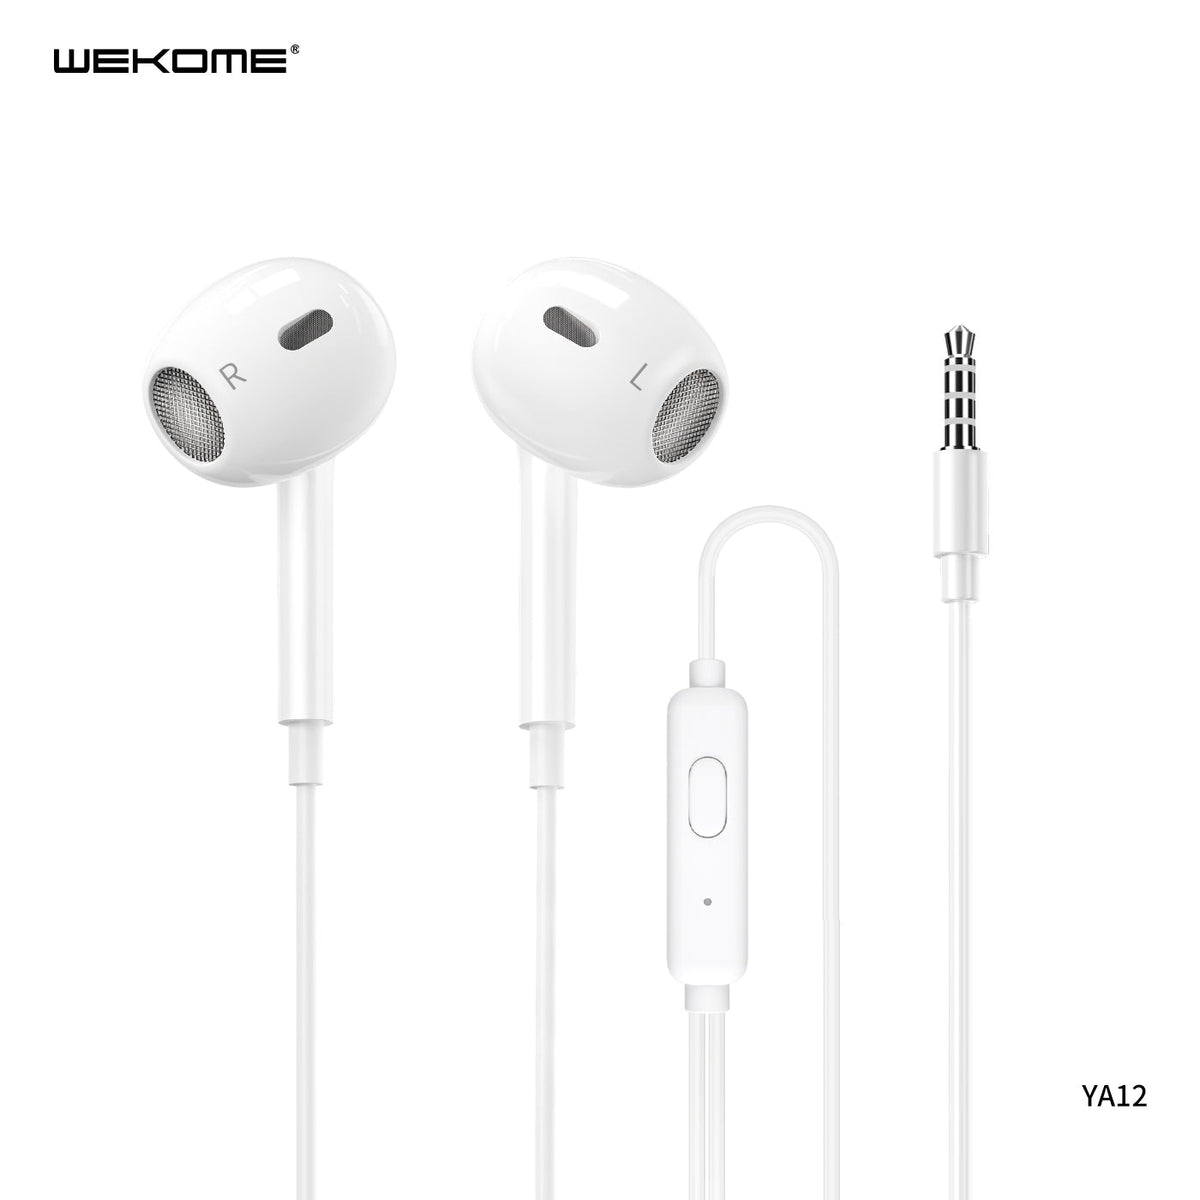 WEKOME YA12 WIRED EARPHONES 3.5MM Wired Earphone